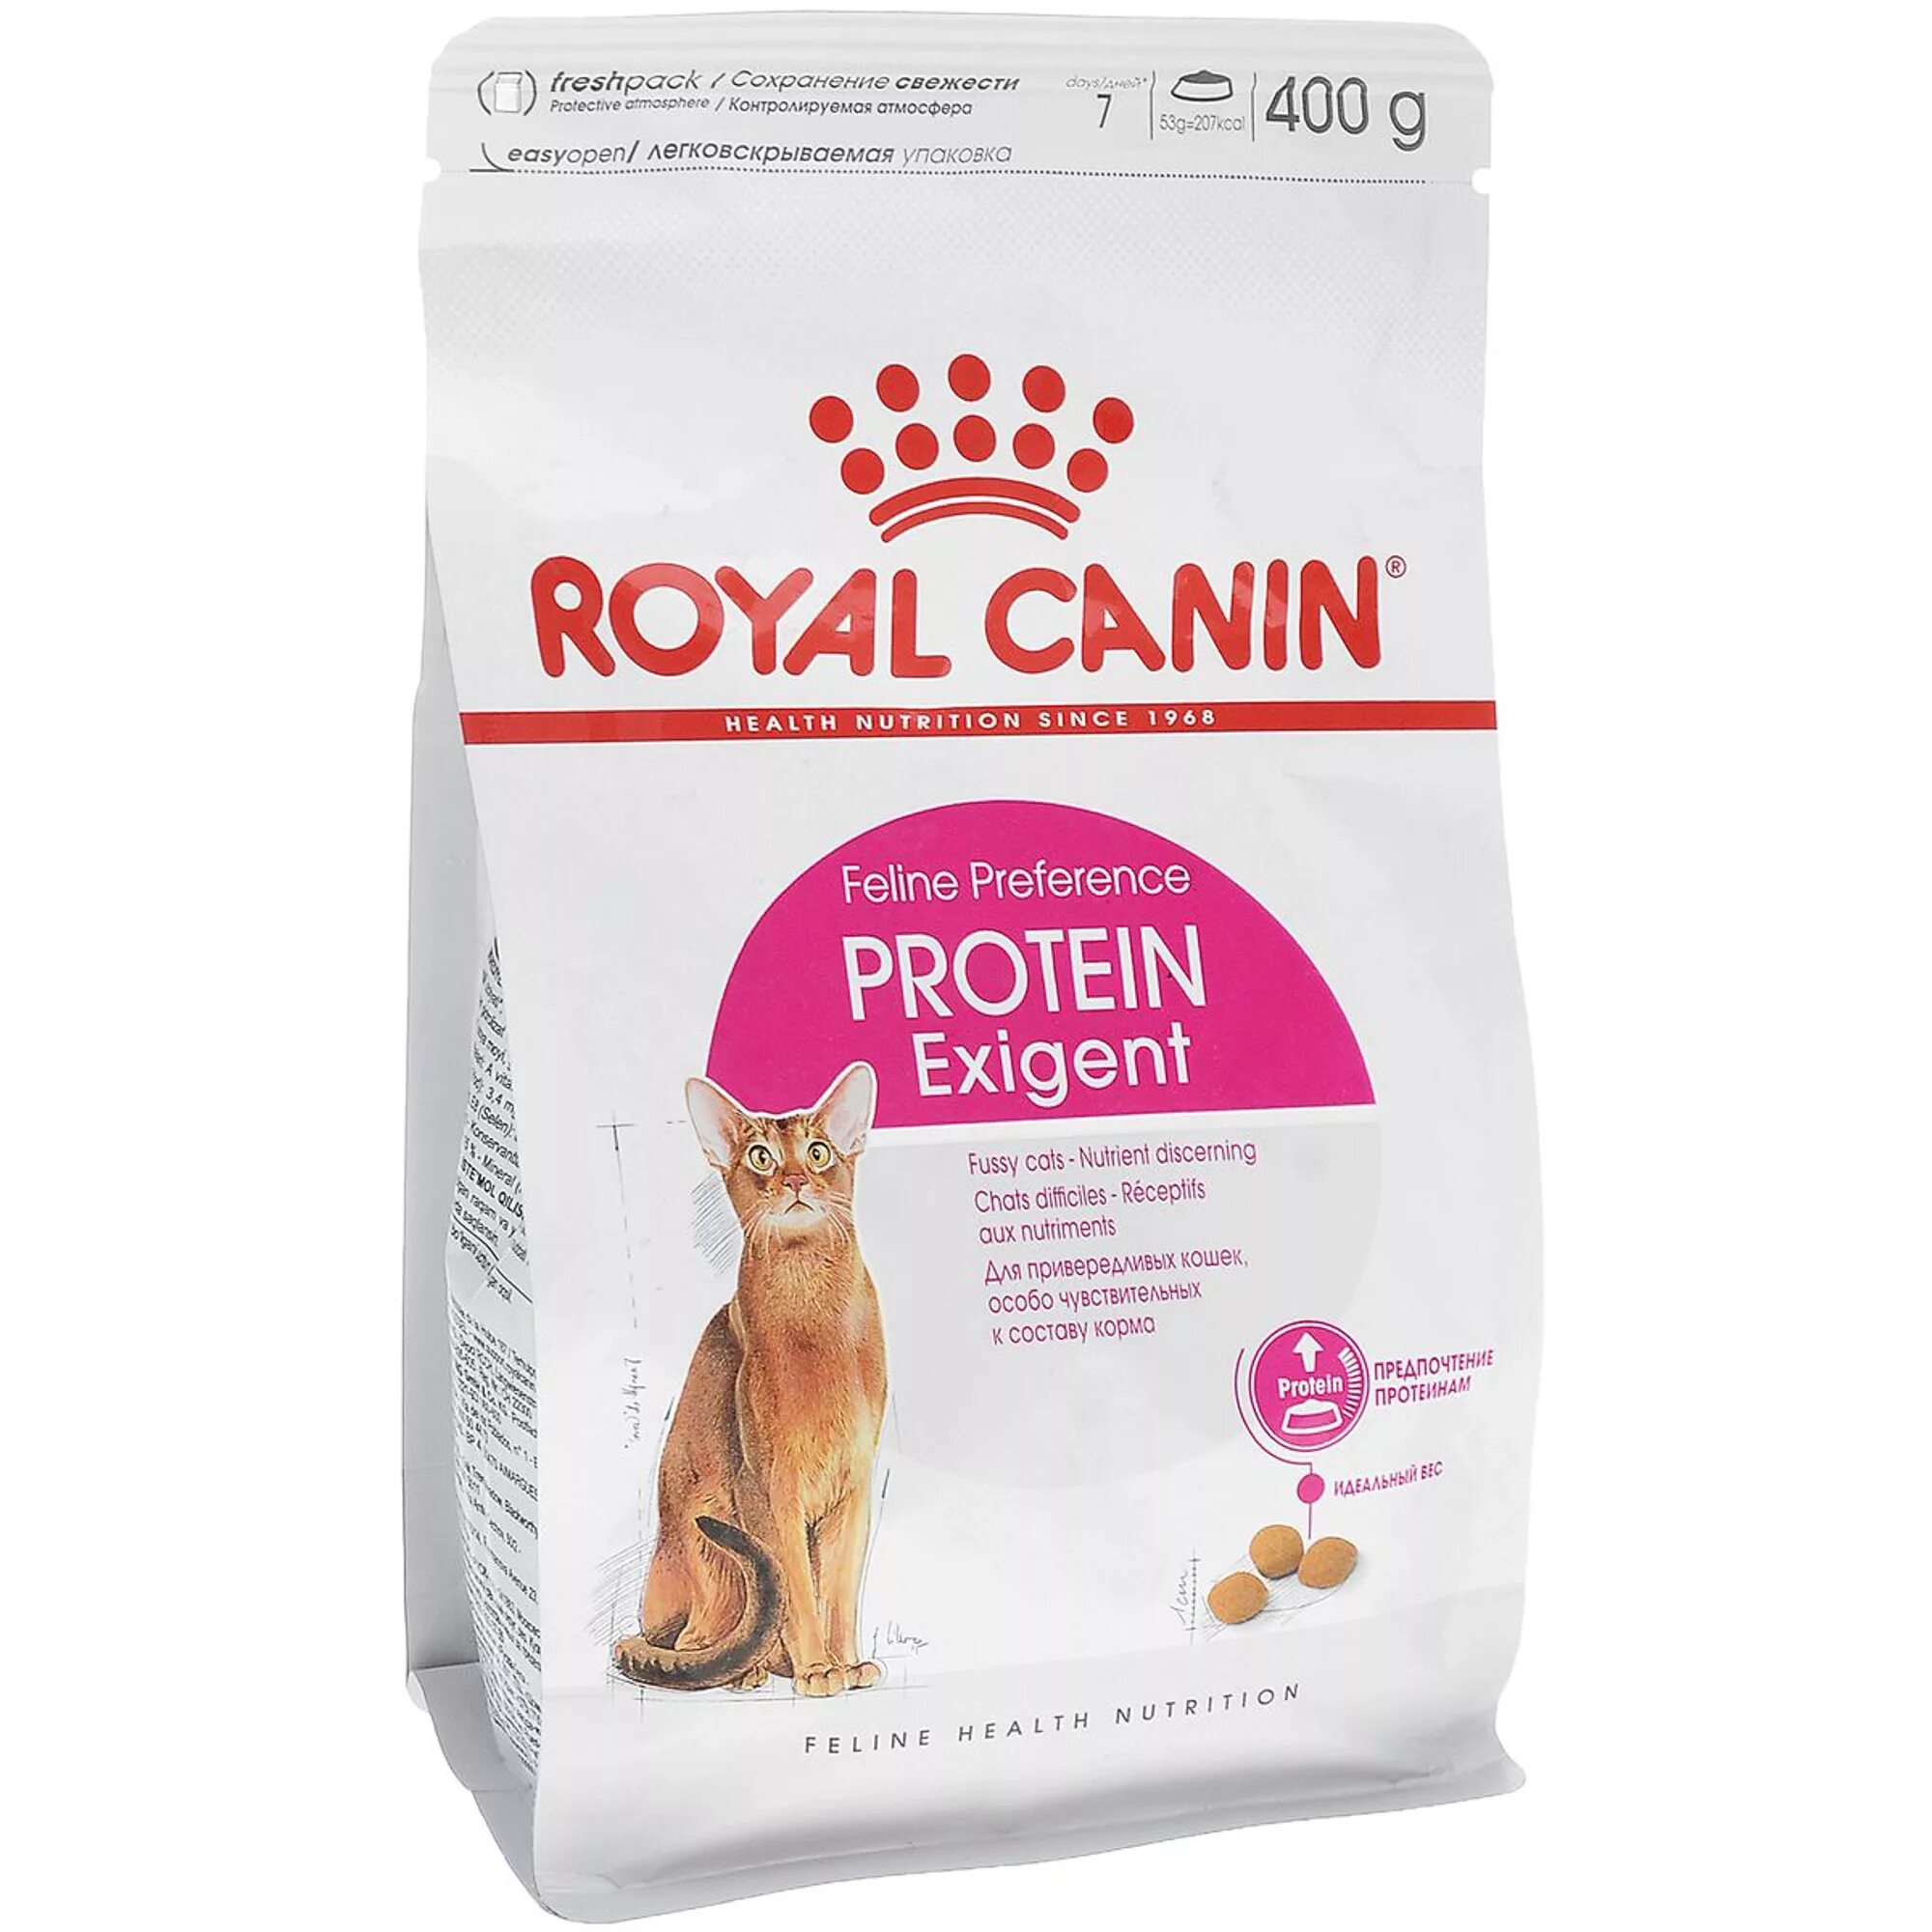 Royal Canin Protein exigent корм для кошек, 400 г. Royal Canin Protein exigent для кошек. Роял Канин протеин Эксиджент для кошек 400 гр. Роял Канин для кошек 400гр в ассортименте.